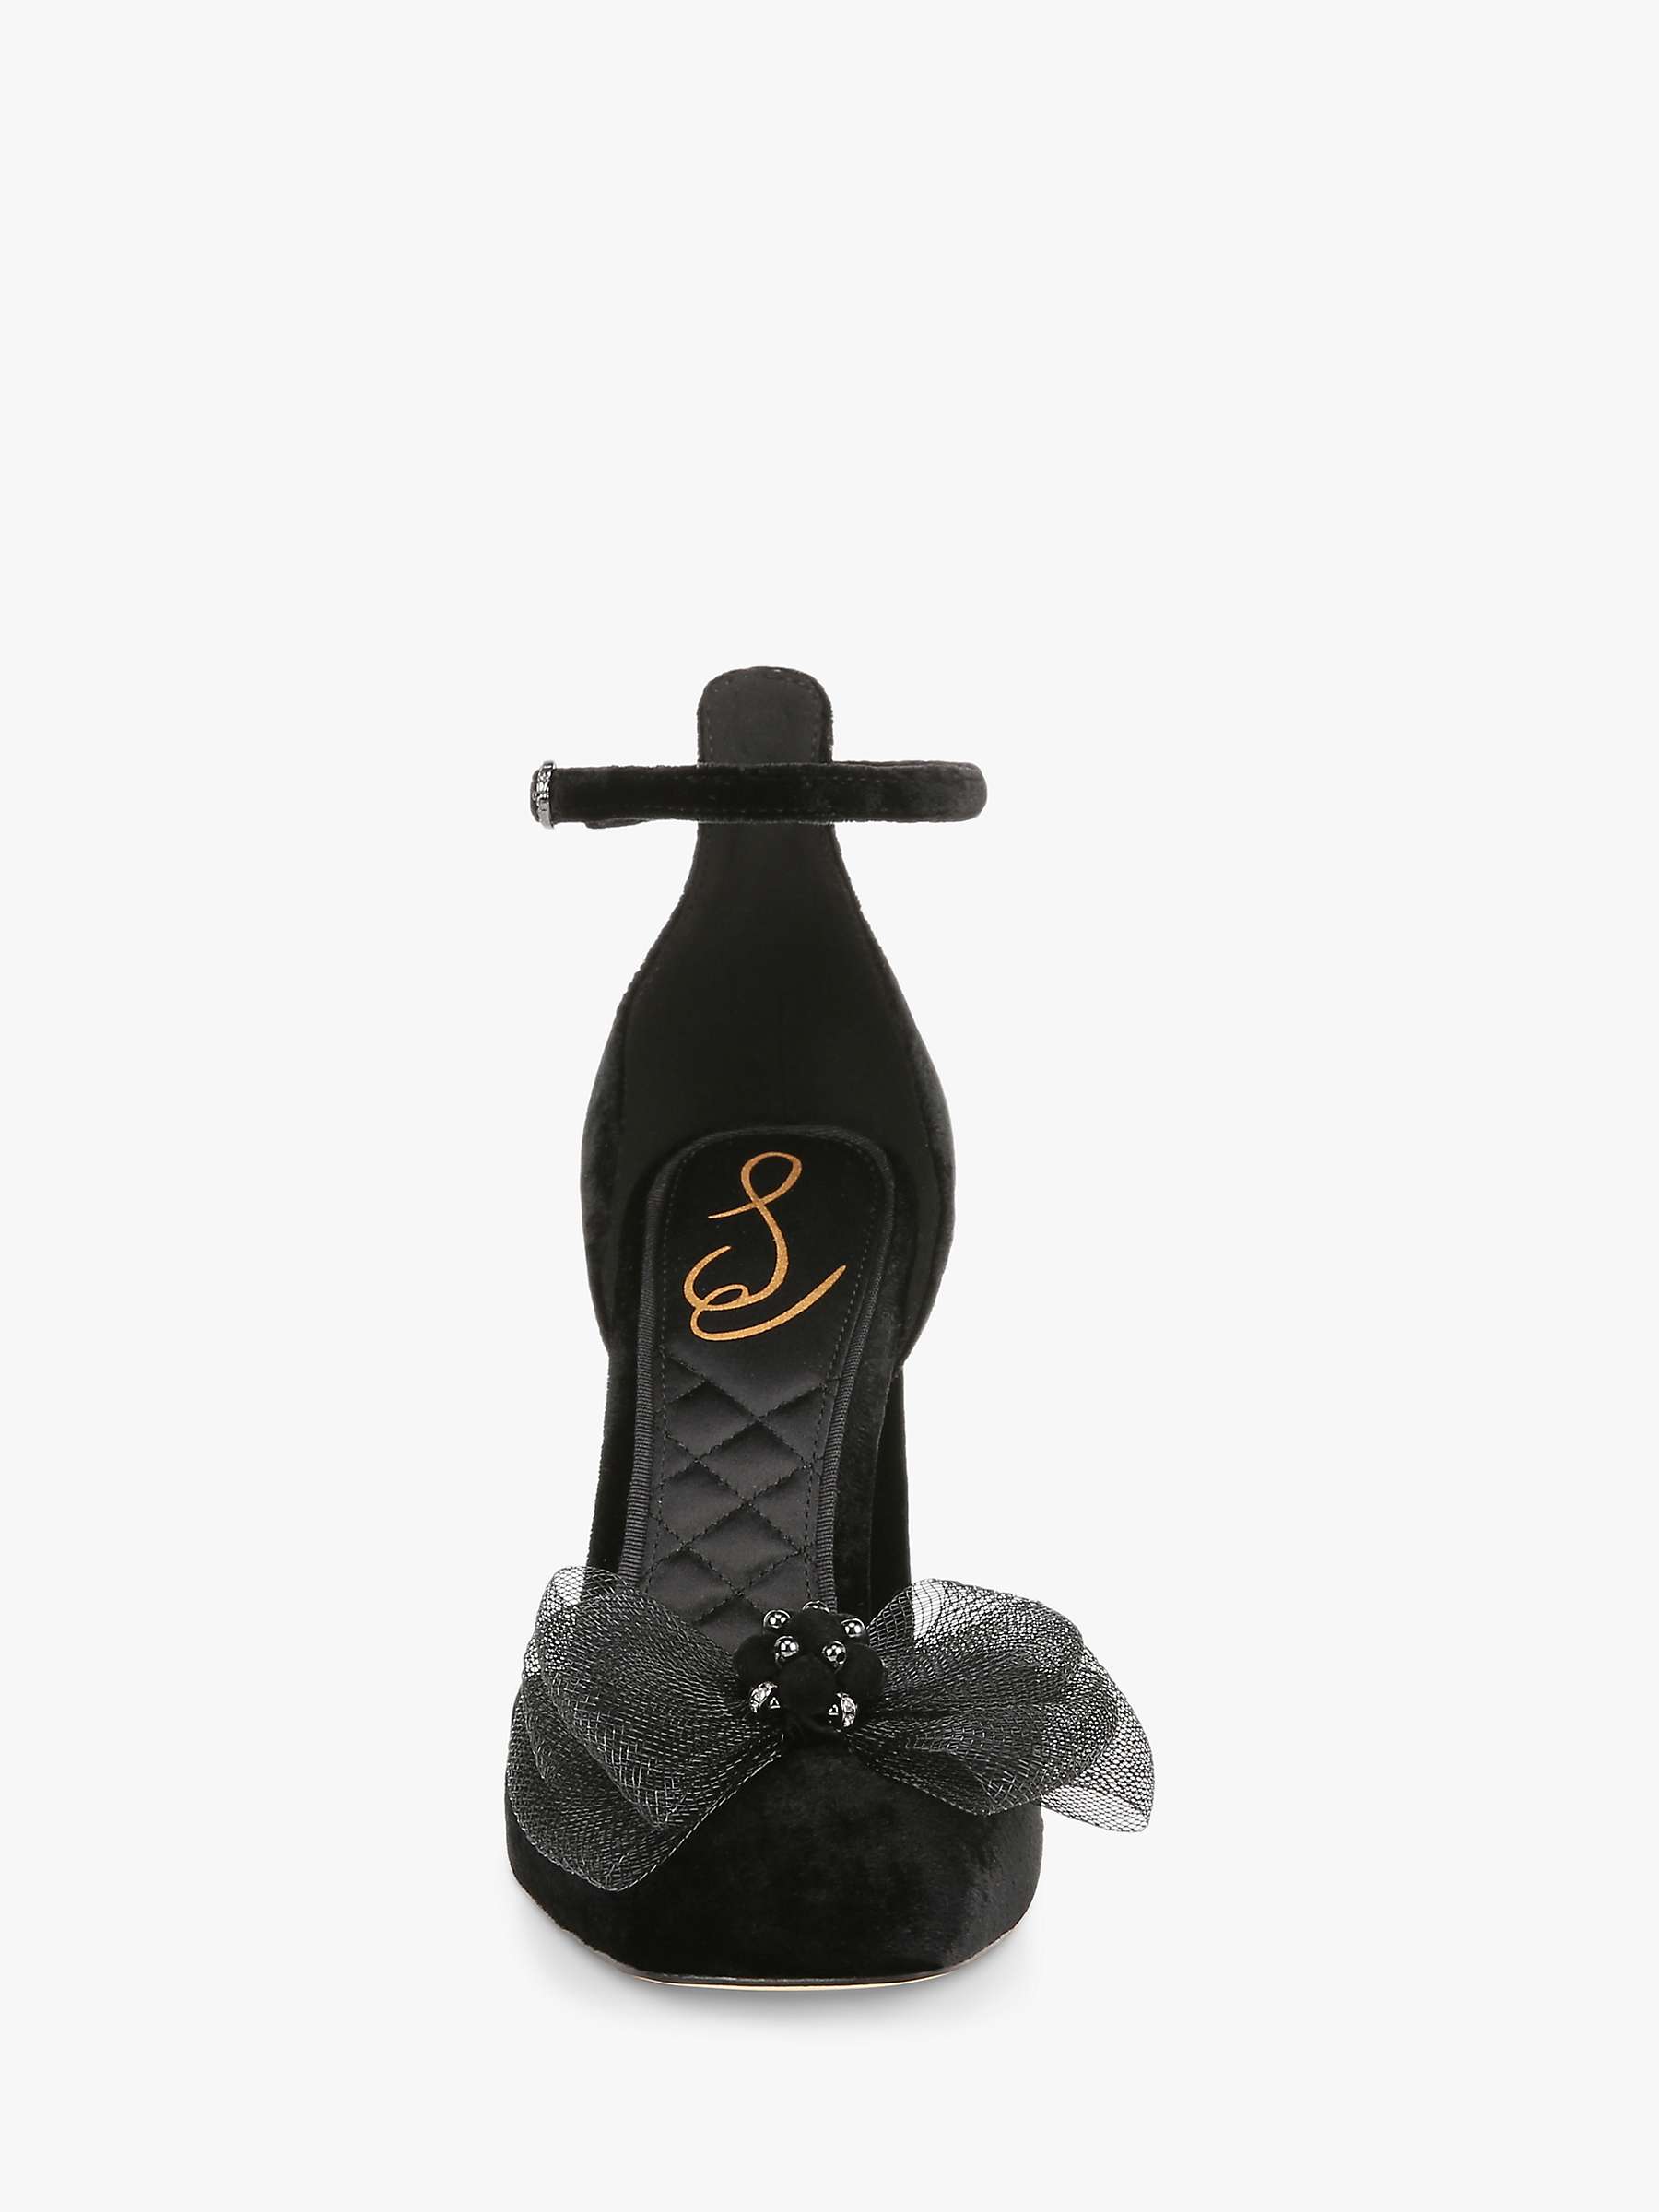 Buy Sam Edelman Colter Ankle Strap Heeled Court Shoes, Black Online at johnlewis.com